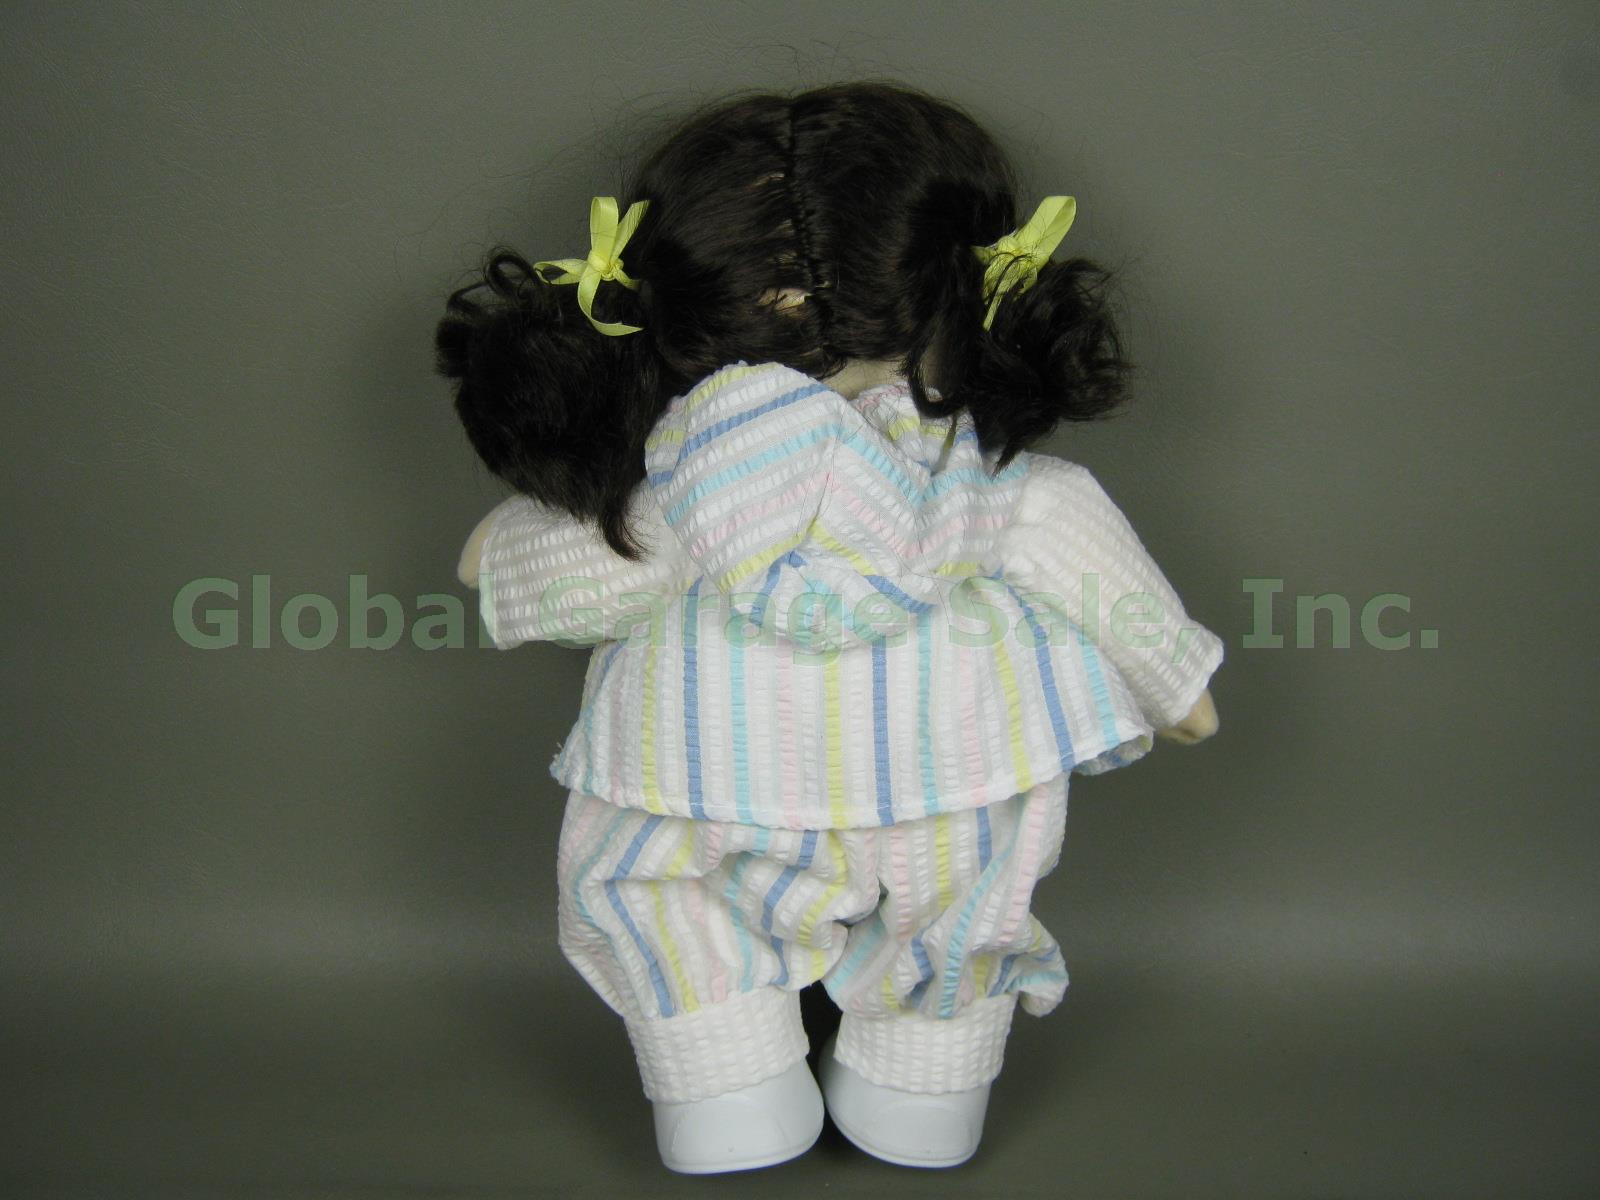 Vtg 1985 Mattel Brunette My Child Doll W/ Green Eyes Brown Hair Outfit + Book NR 2